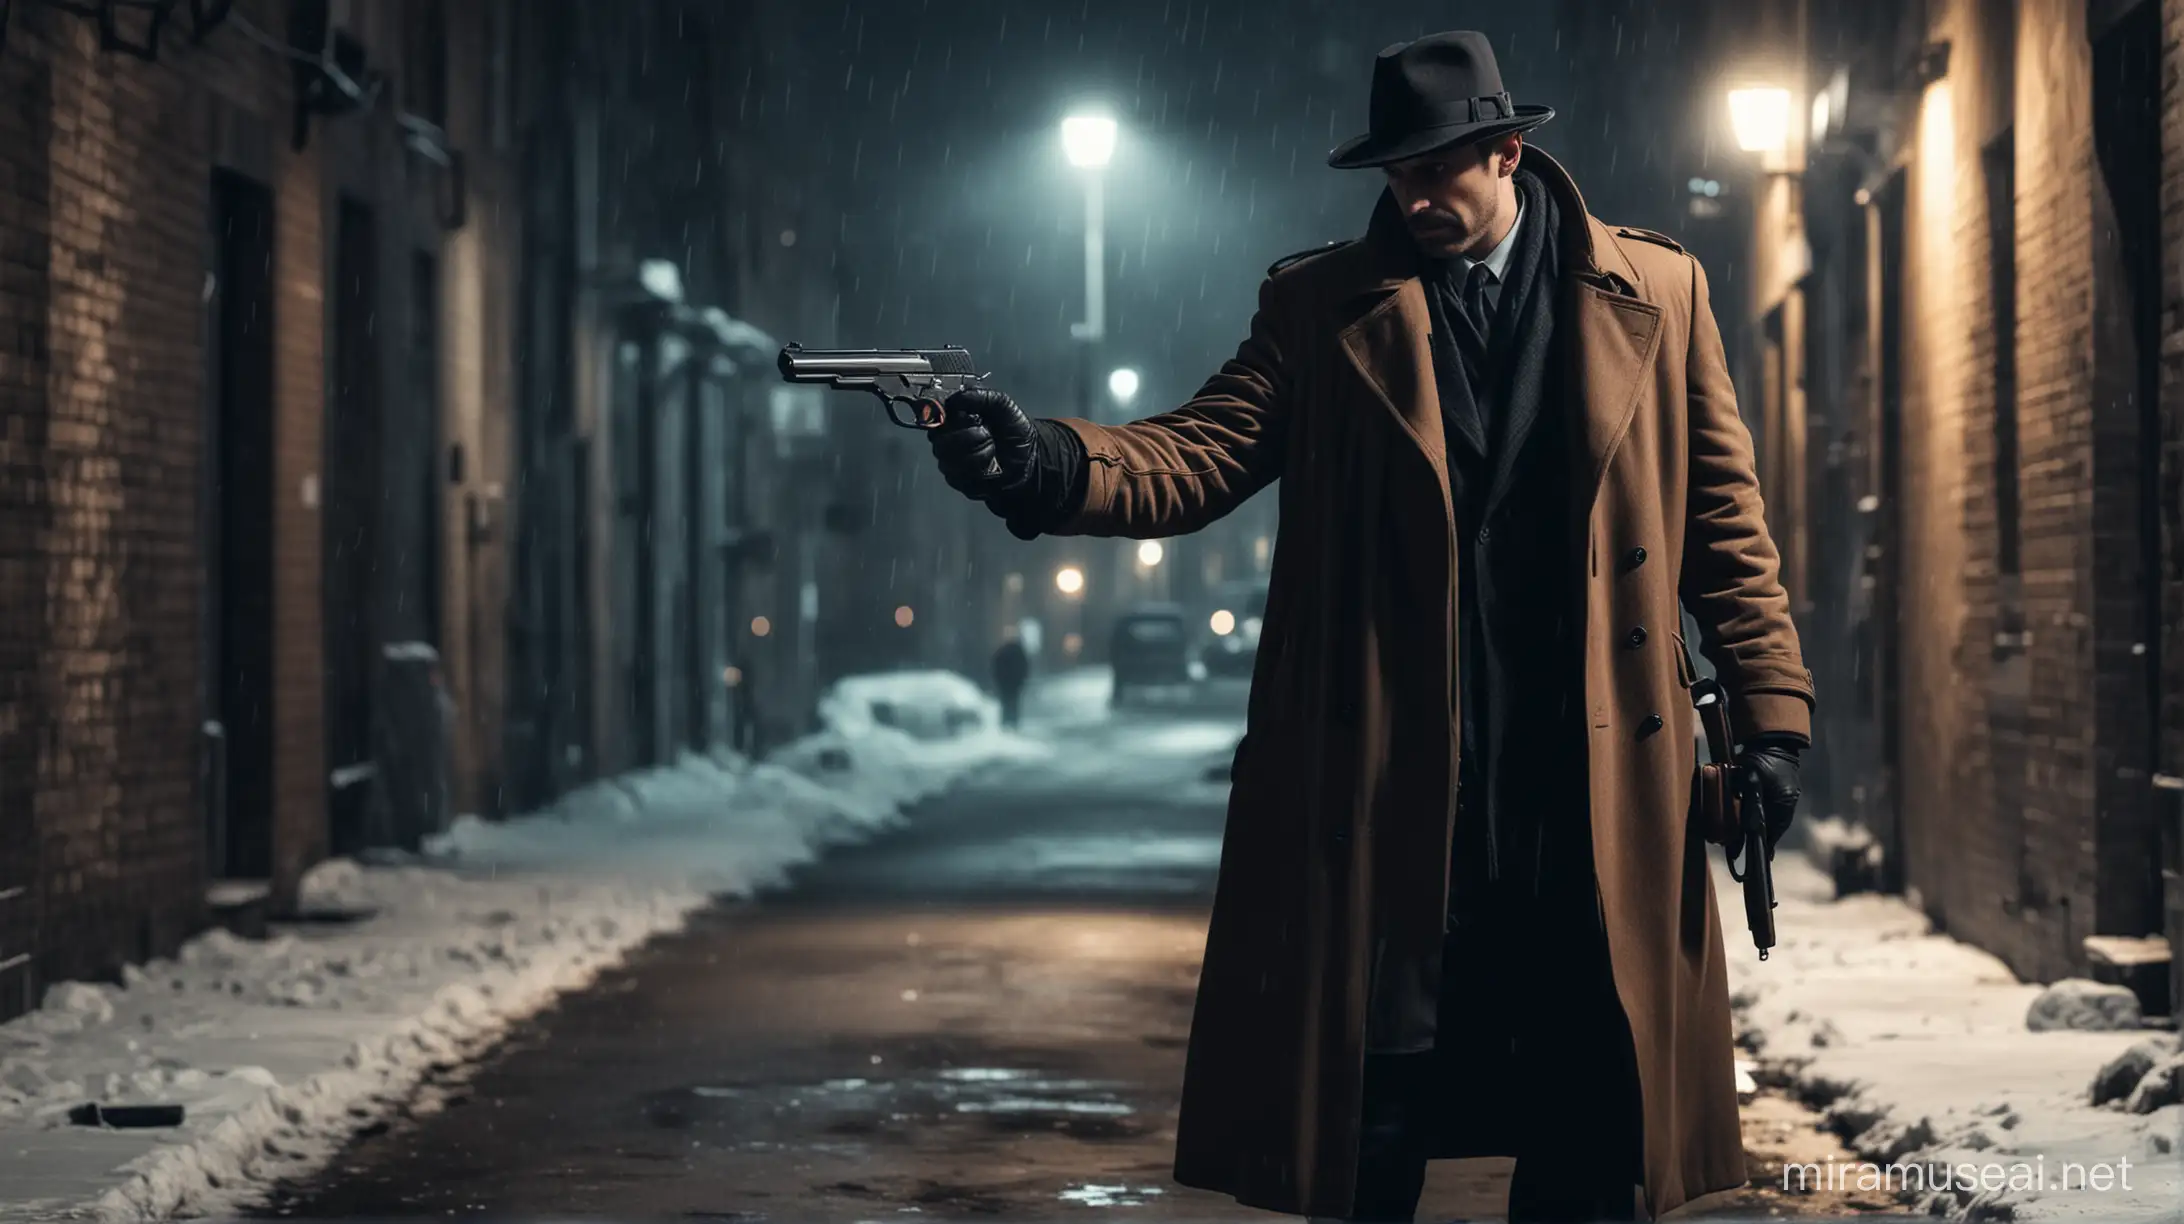 Detective Investigating Murder in Dark City Alley at Winter Night